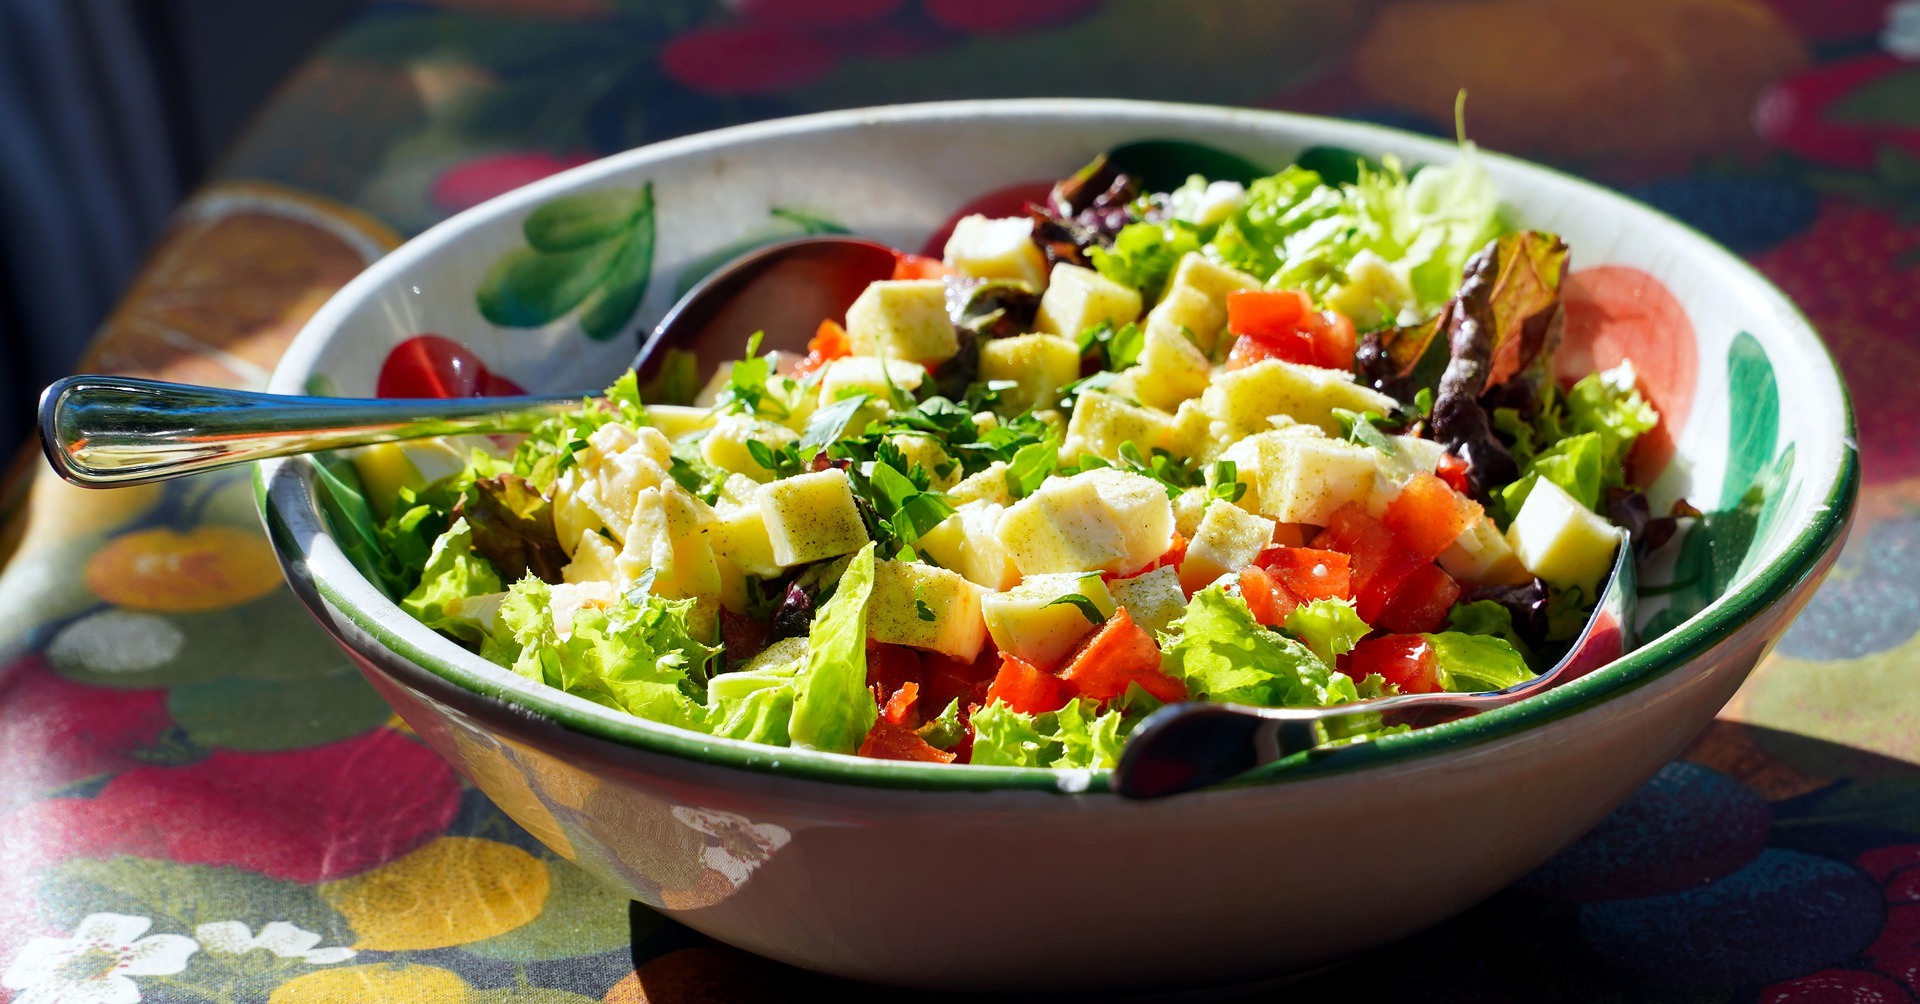 Potato Salad Alternatives You Should Serve at Your Next Cookout